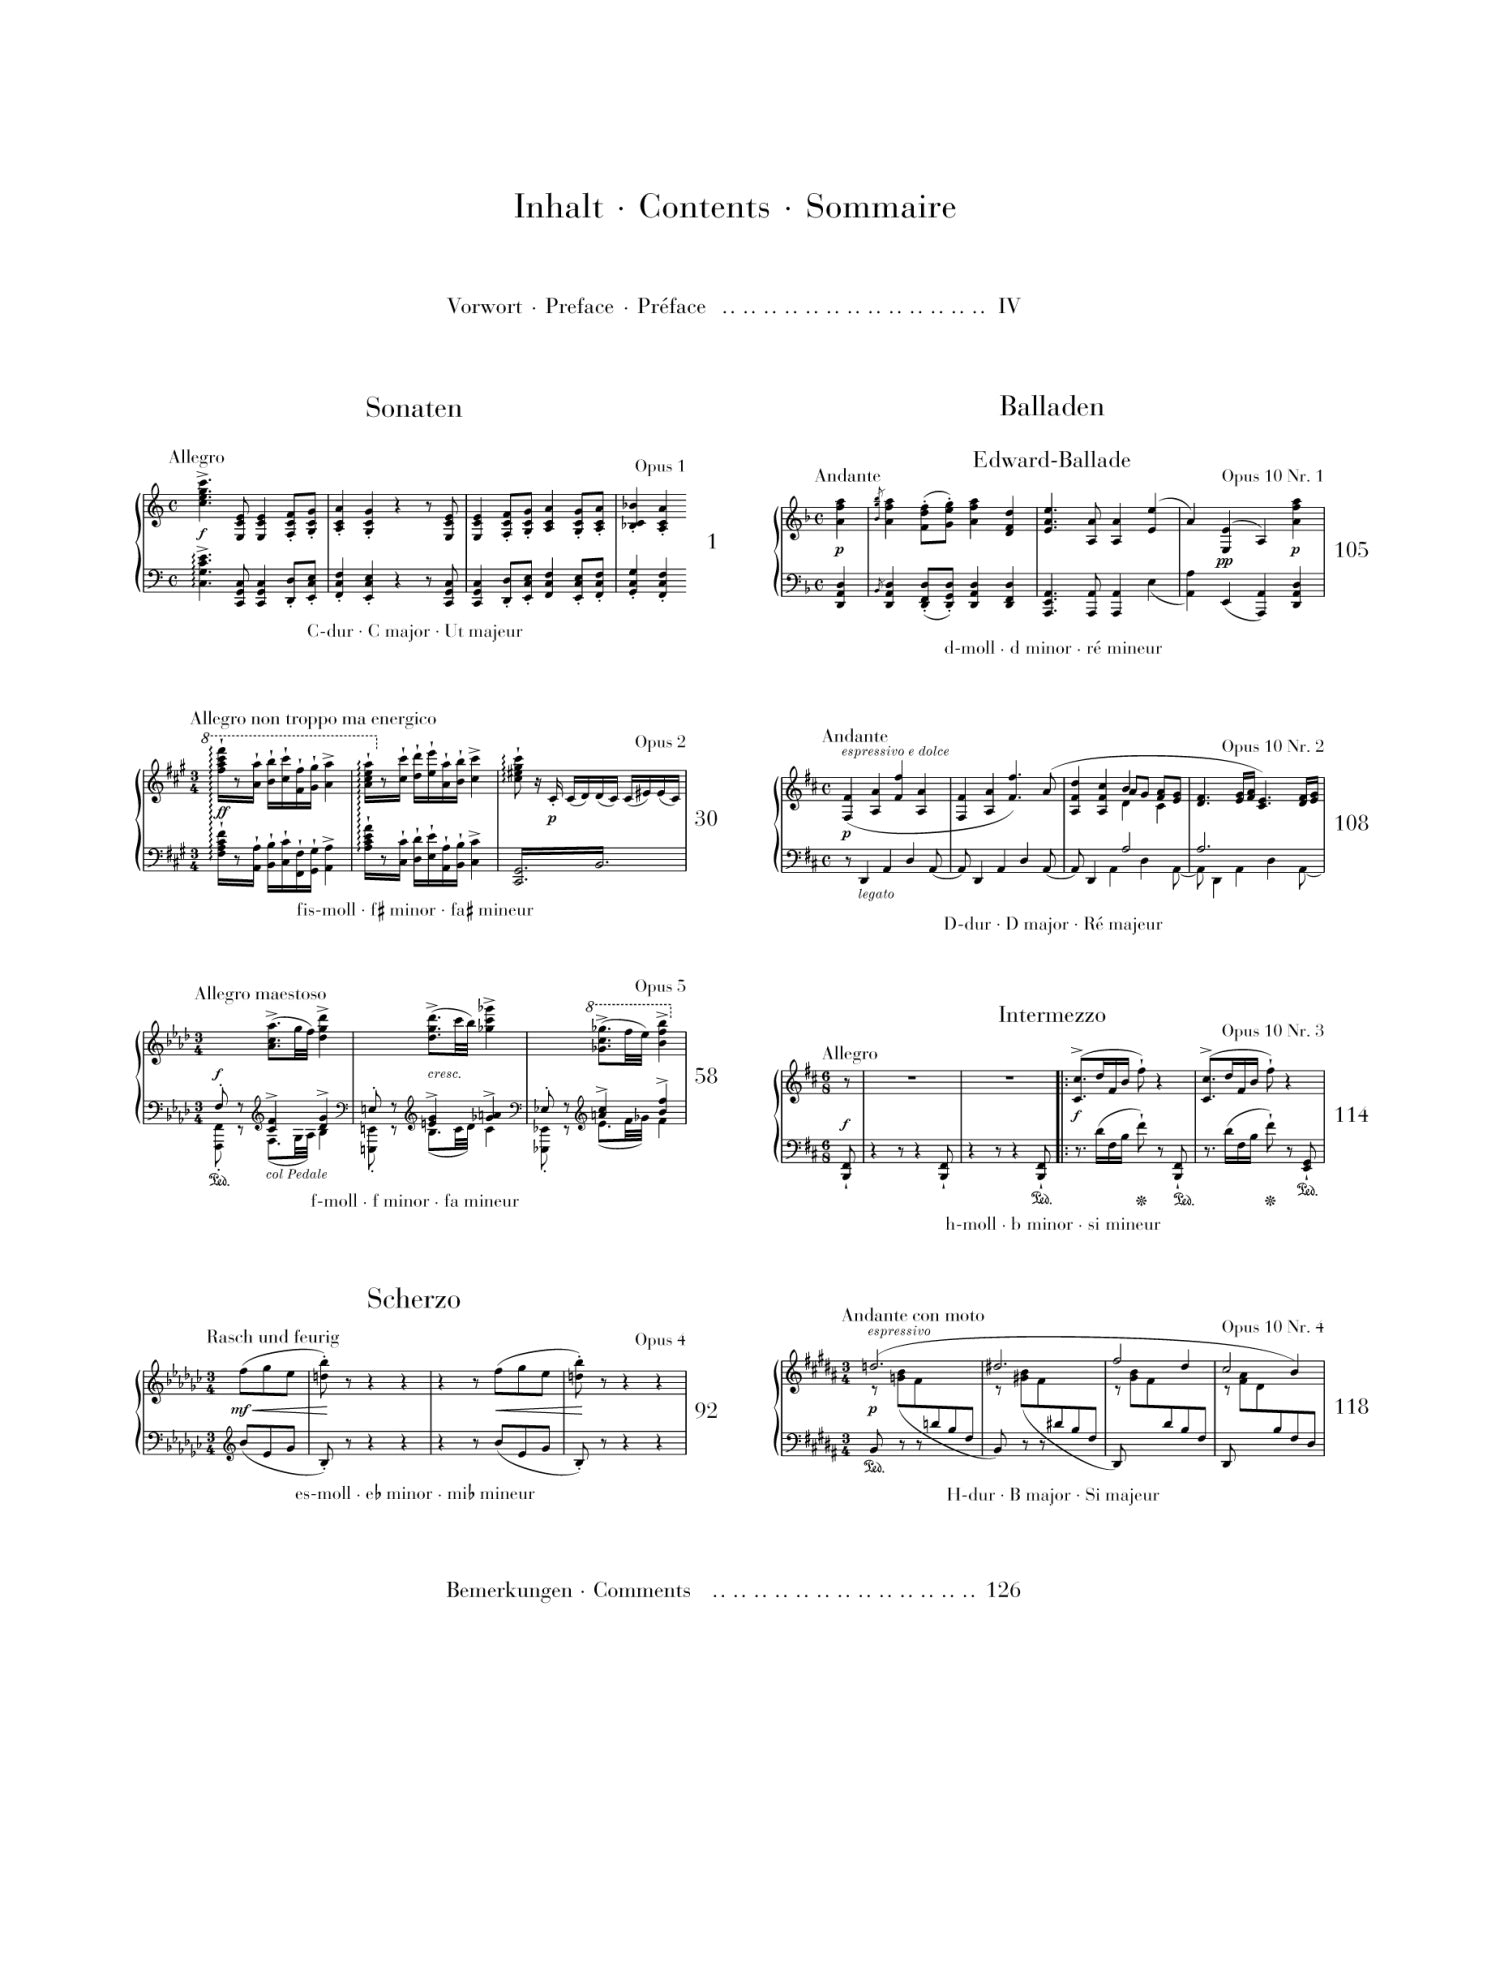 Brahms: Sonatas, Scherzos & Ballades for Piano Solo